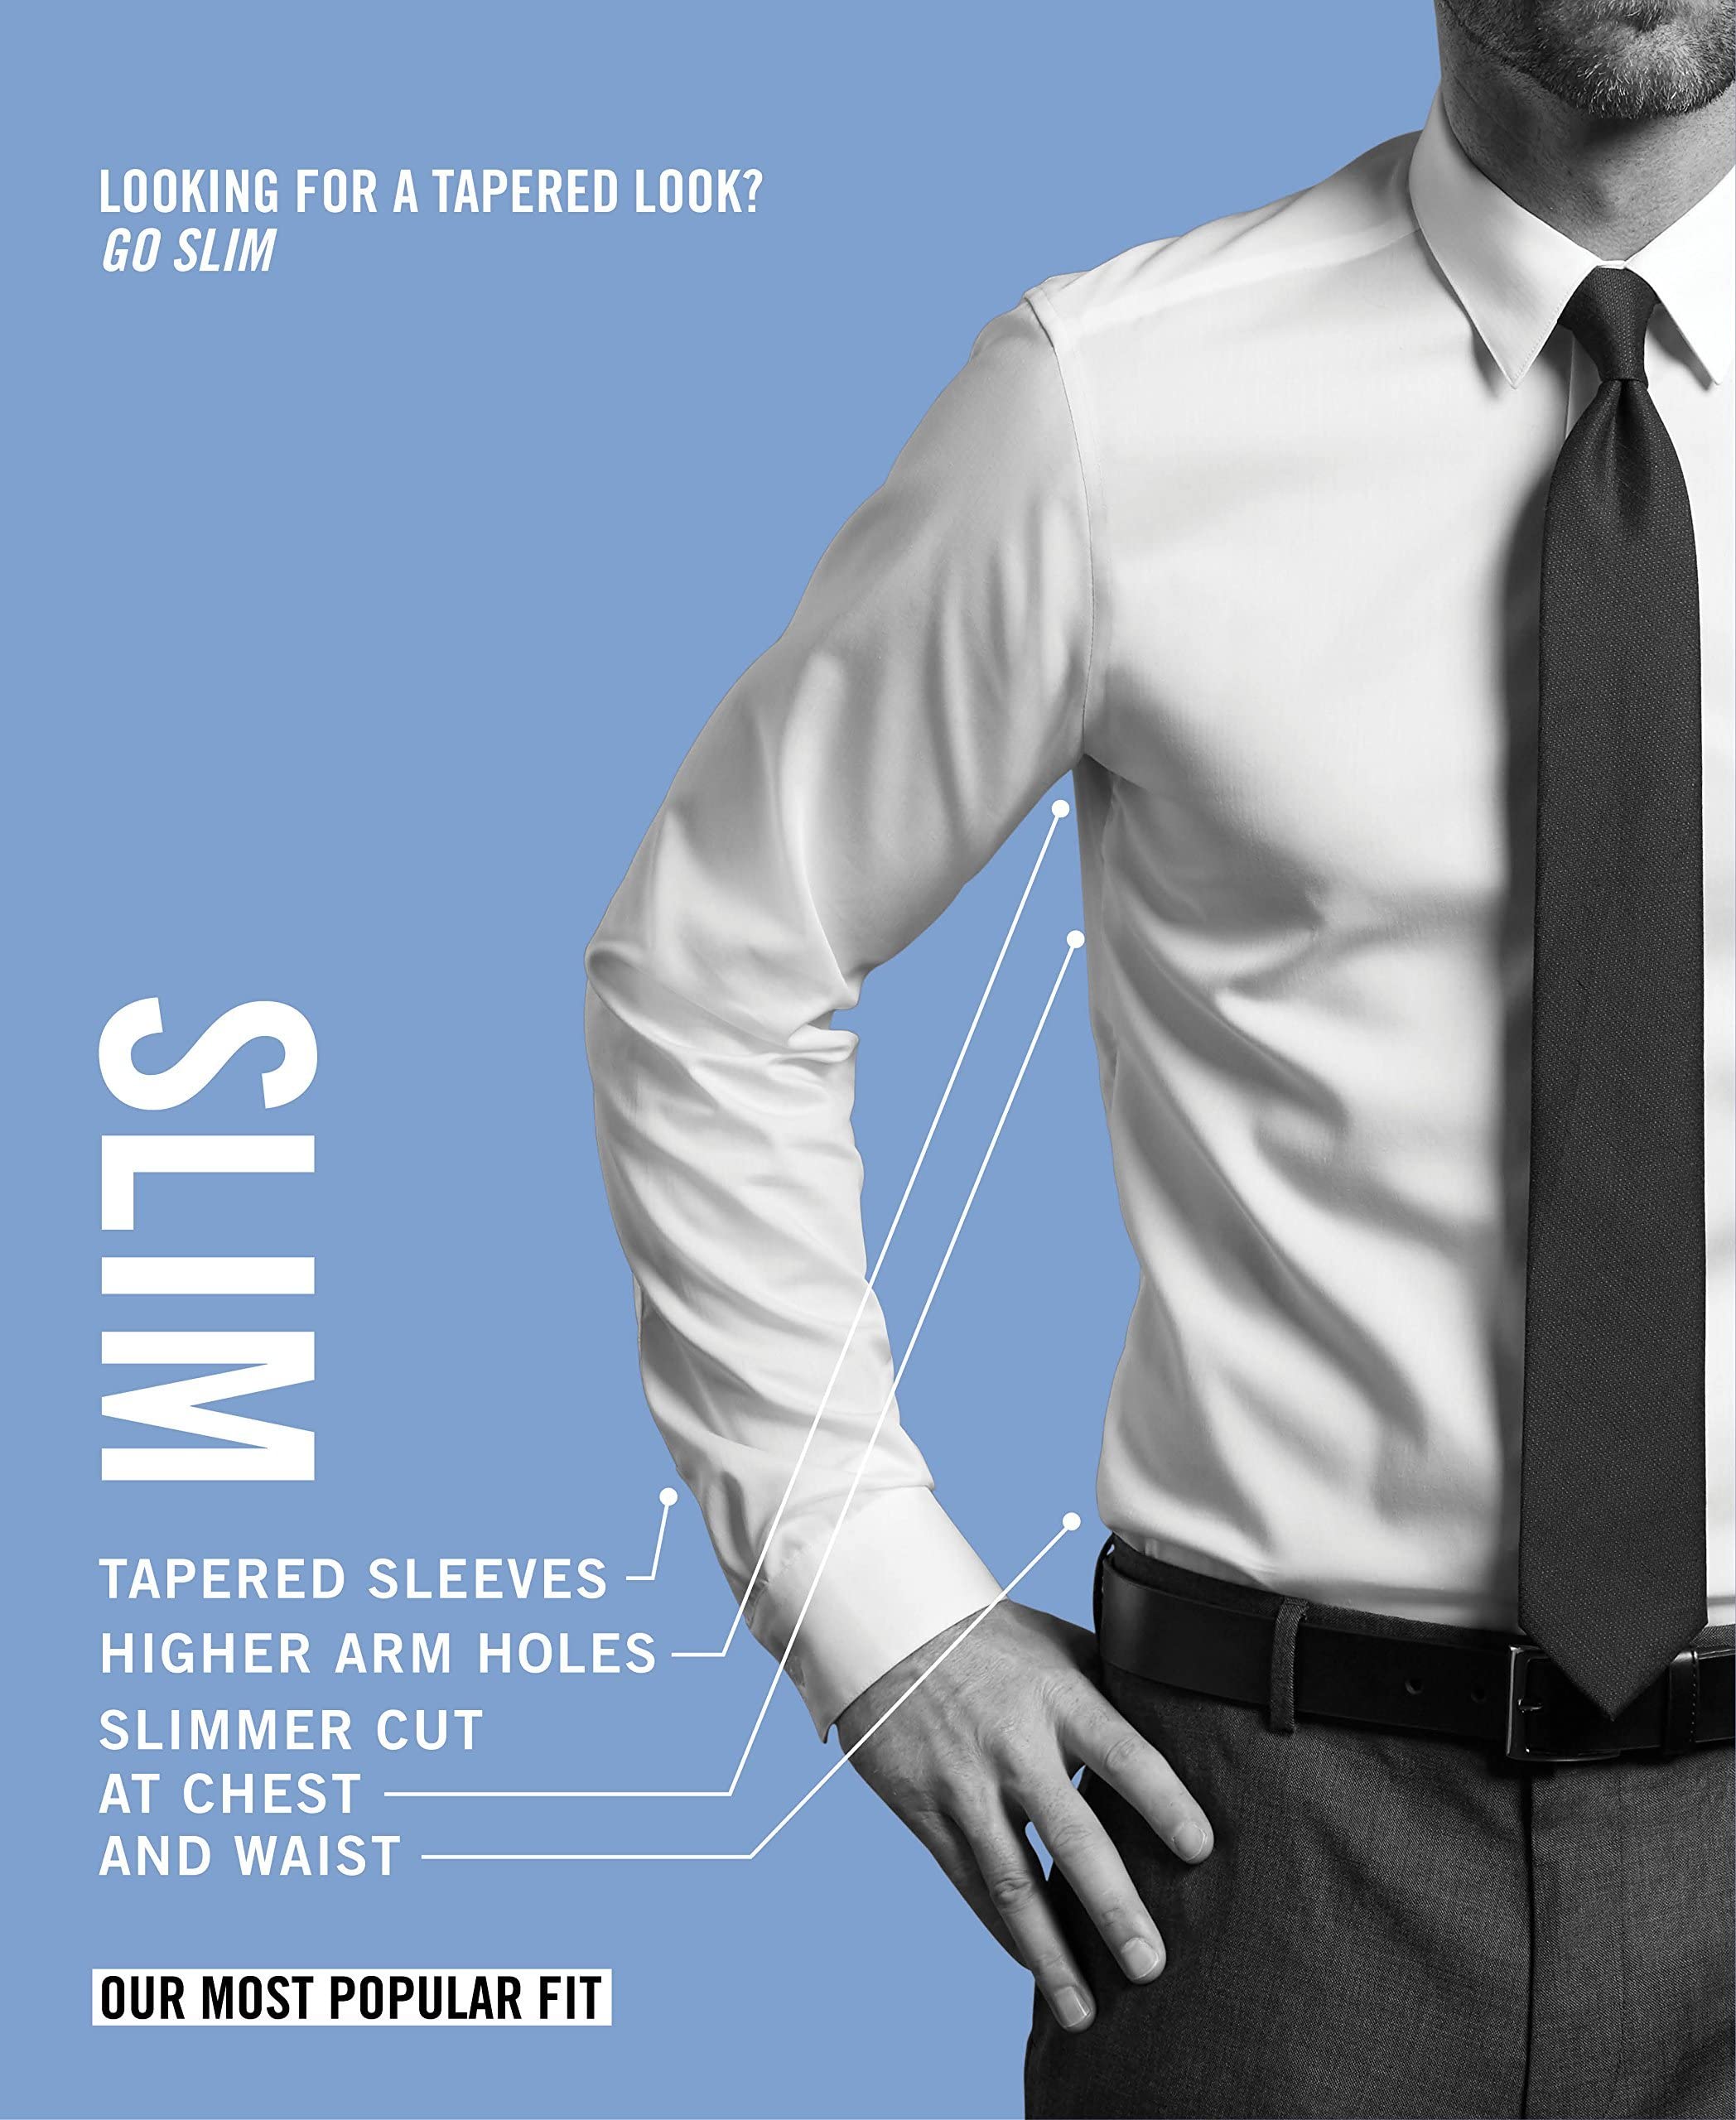 Kenneth Cole Unlisted Men's Dress Shirt Slim Fit Solid , Slim Graphite, 16